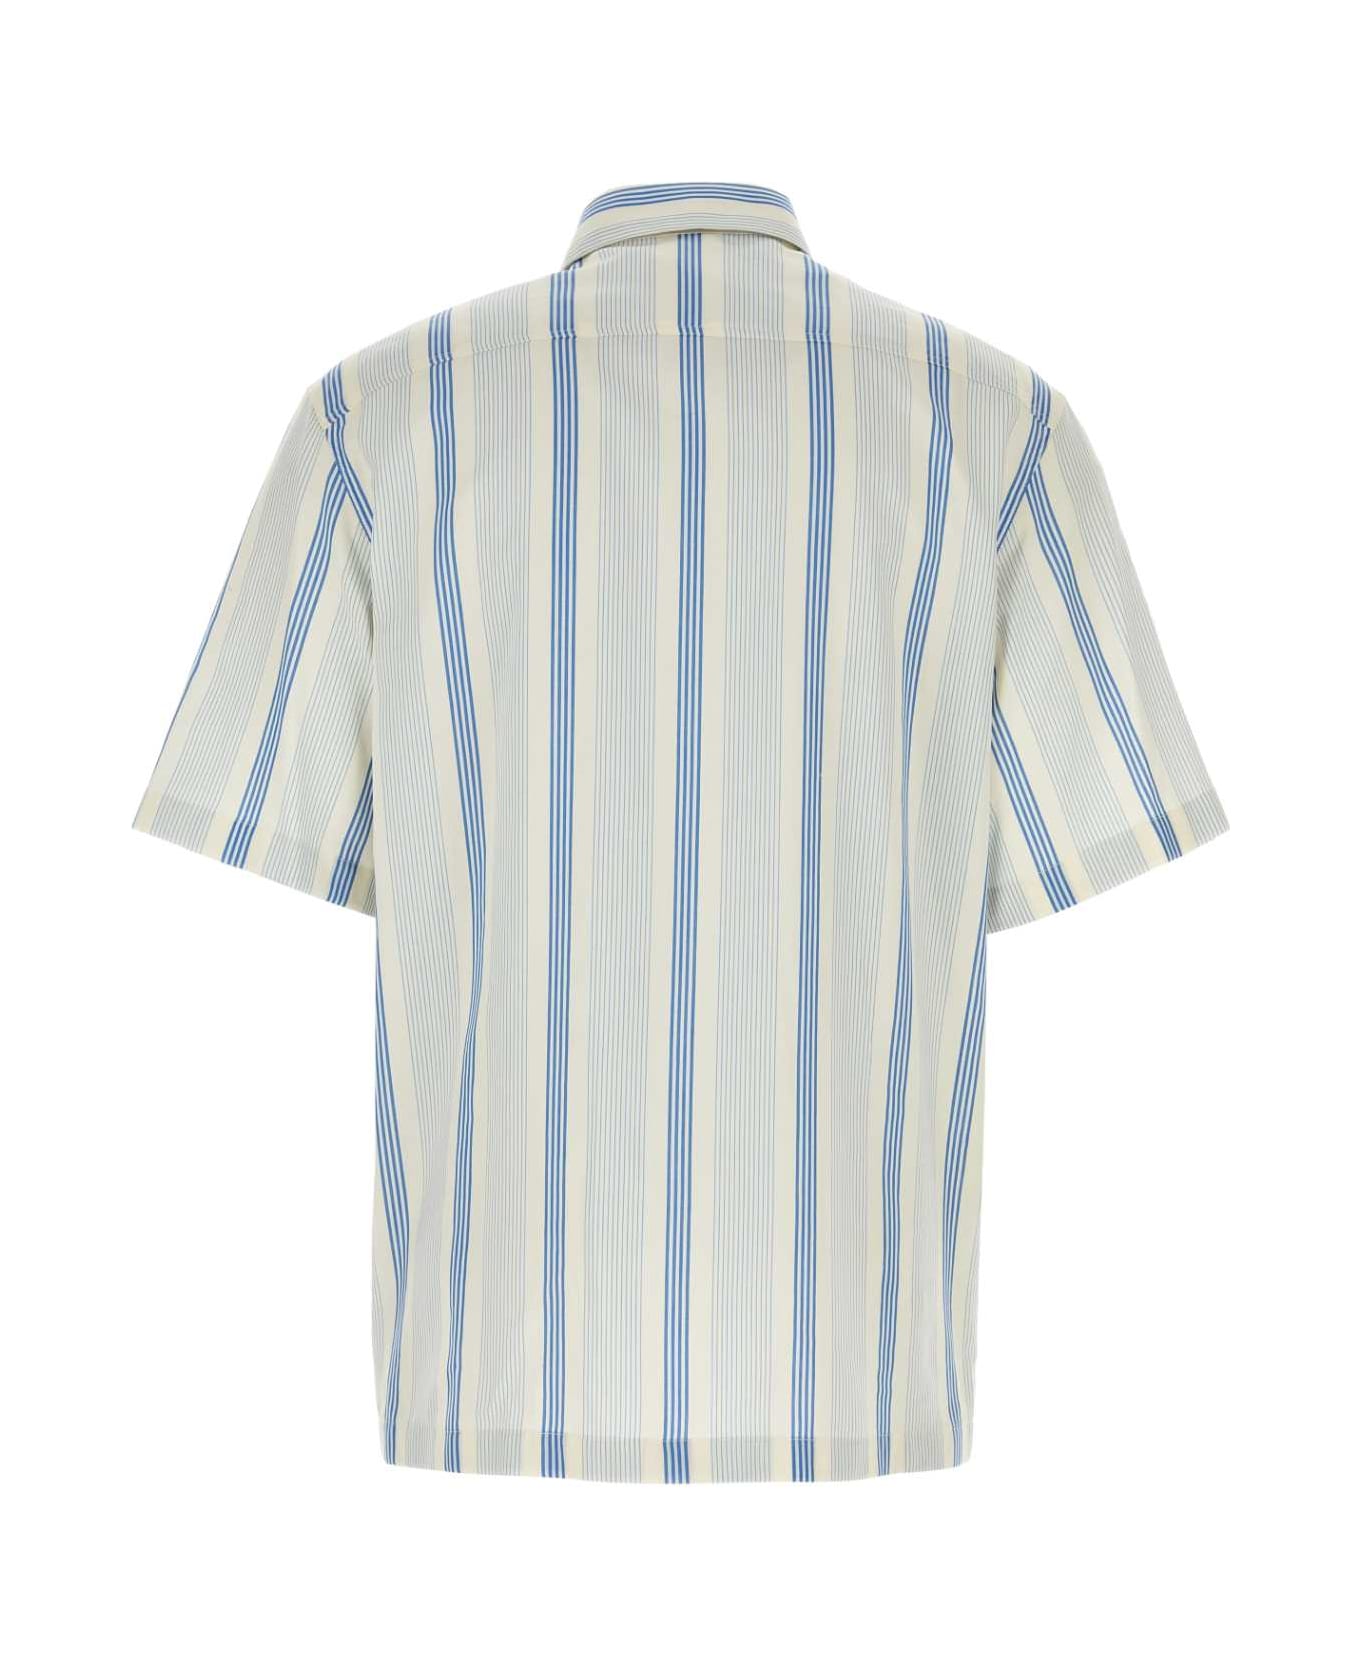 Etro Printed Cotton Shirt - 250 シャツ